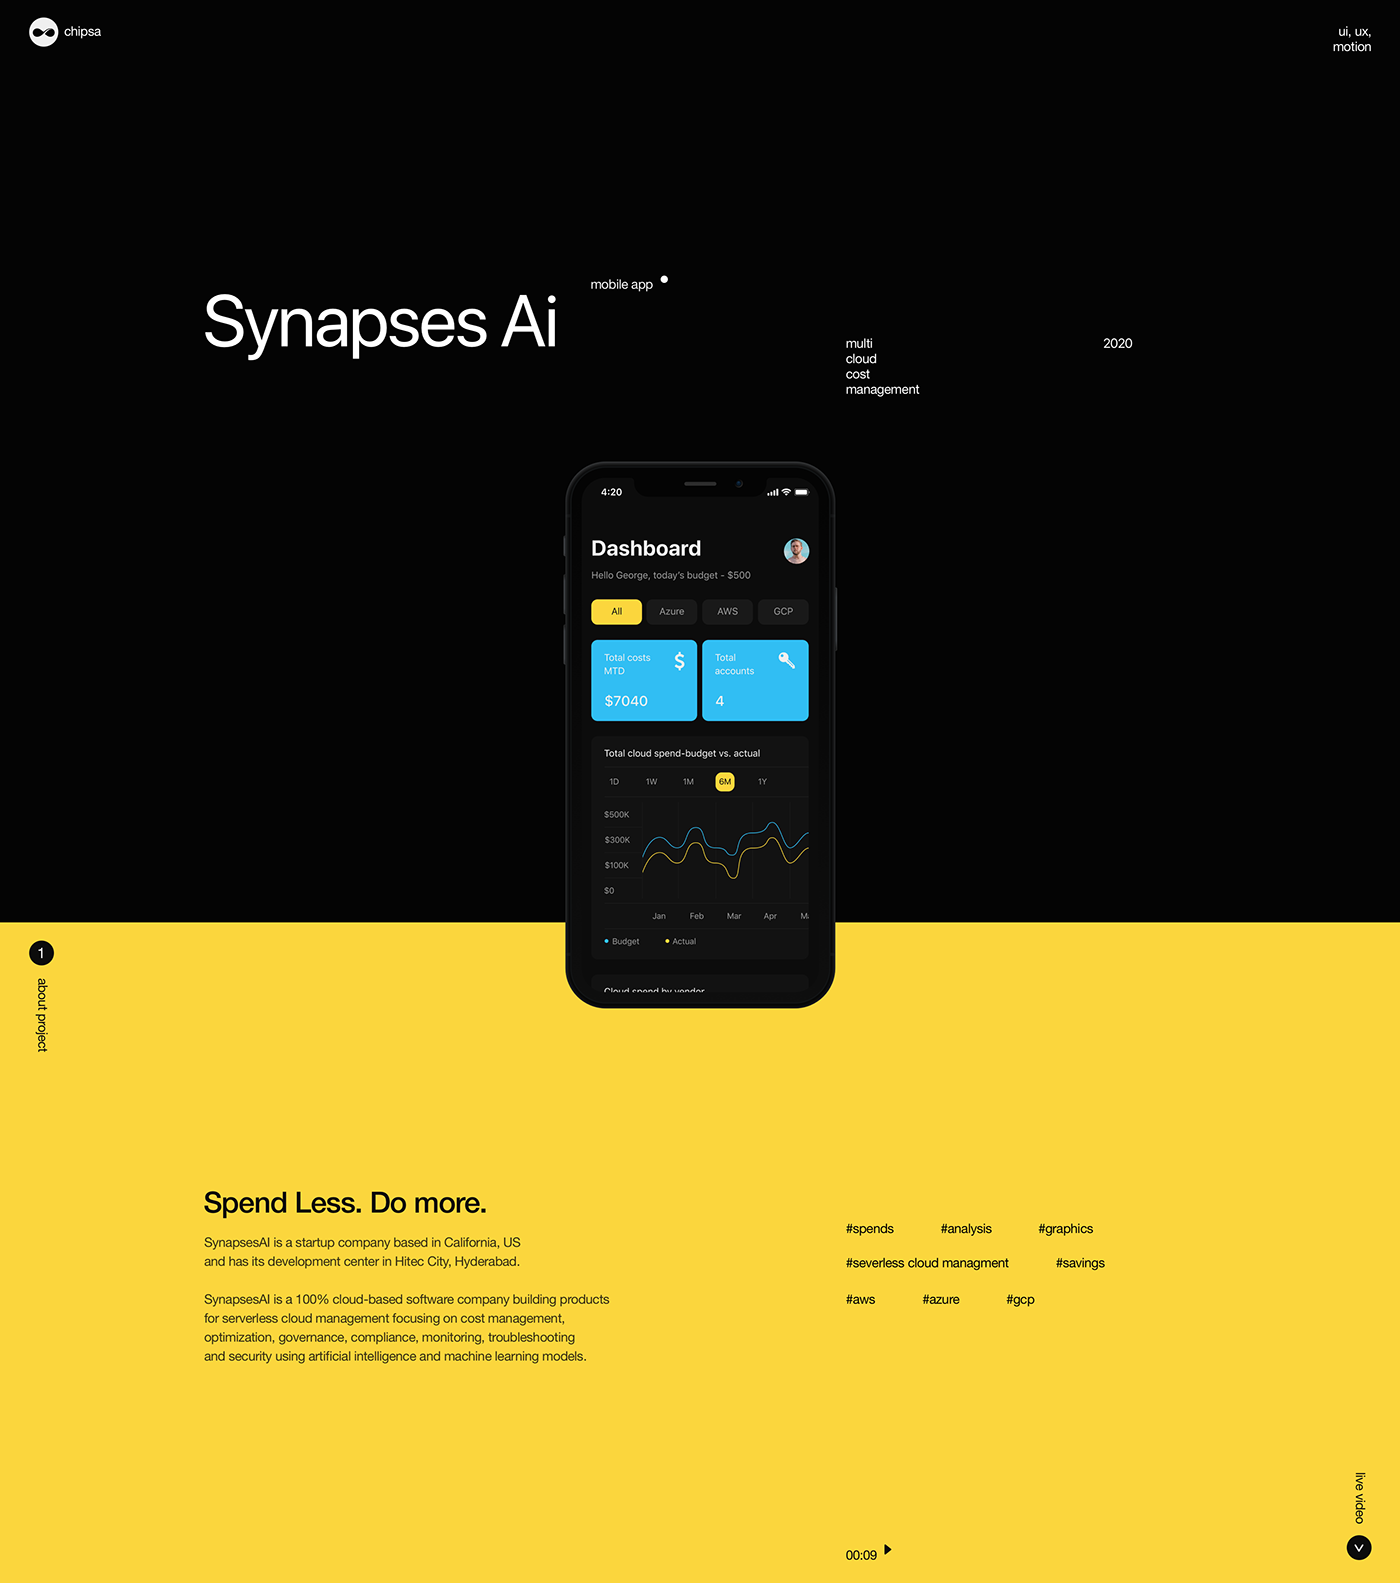 Mobile app inspiration example #396: SynapsesAi - App